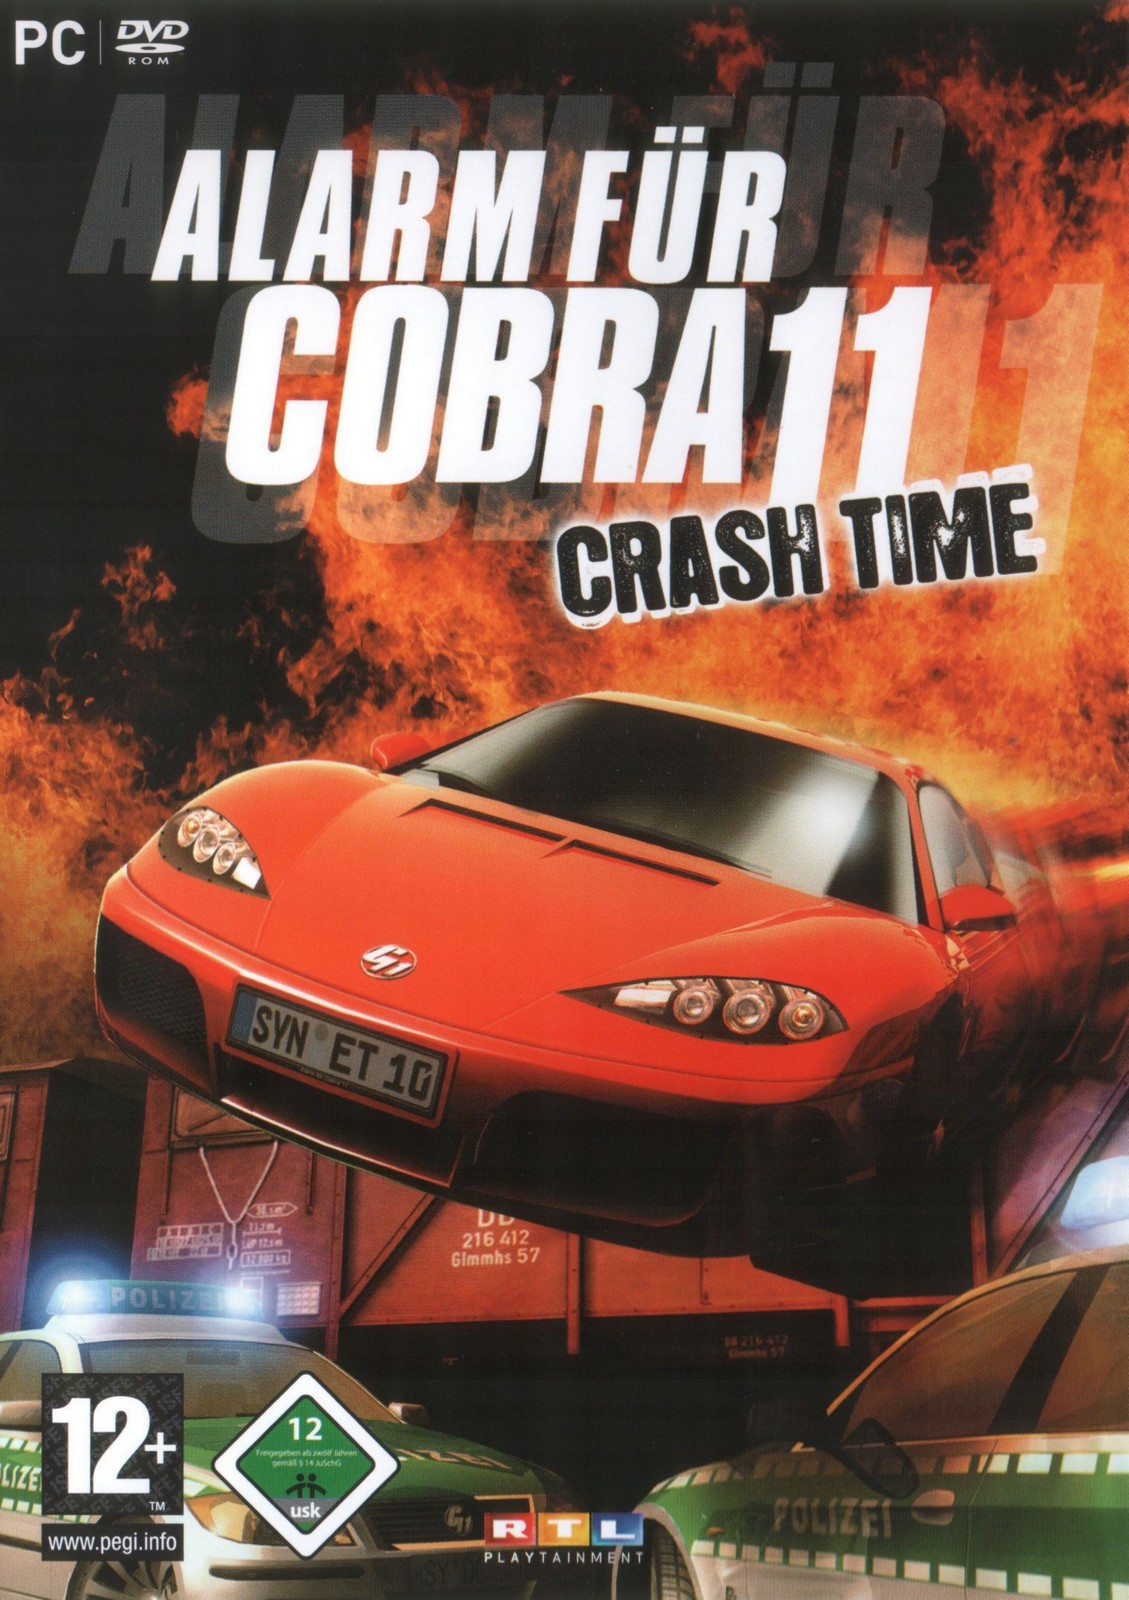 crack alarm for cobra 11 crash